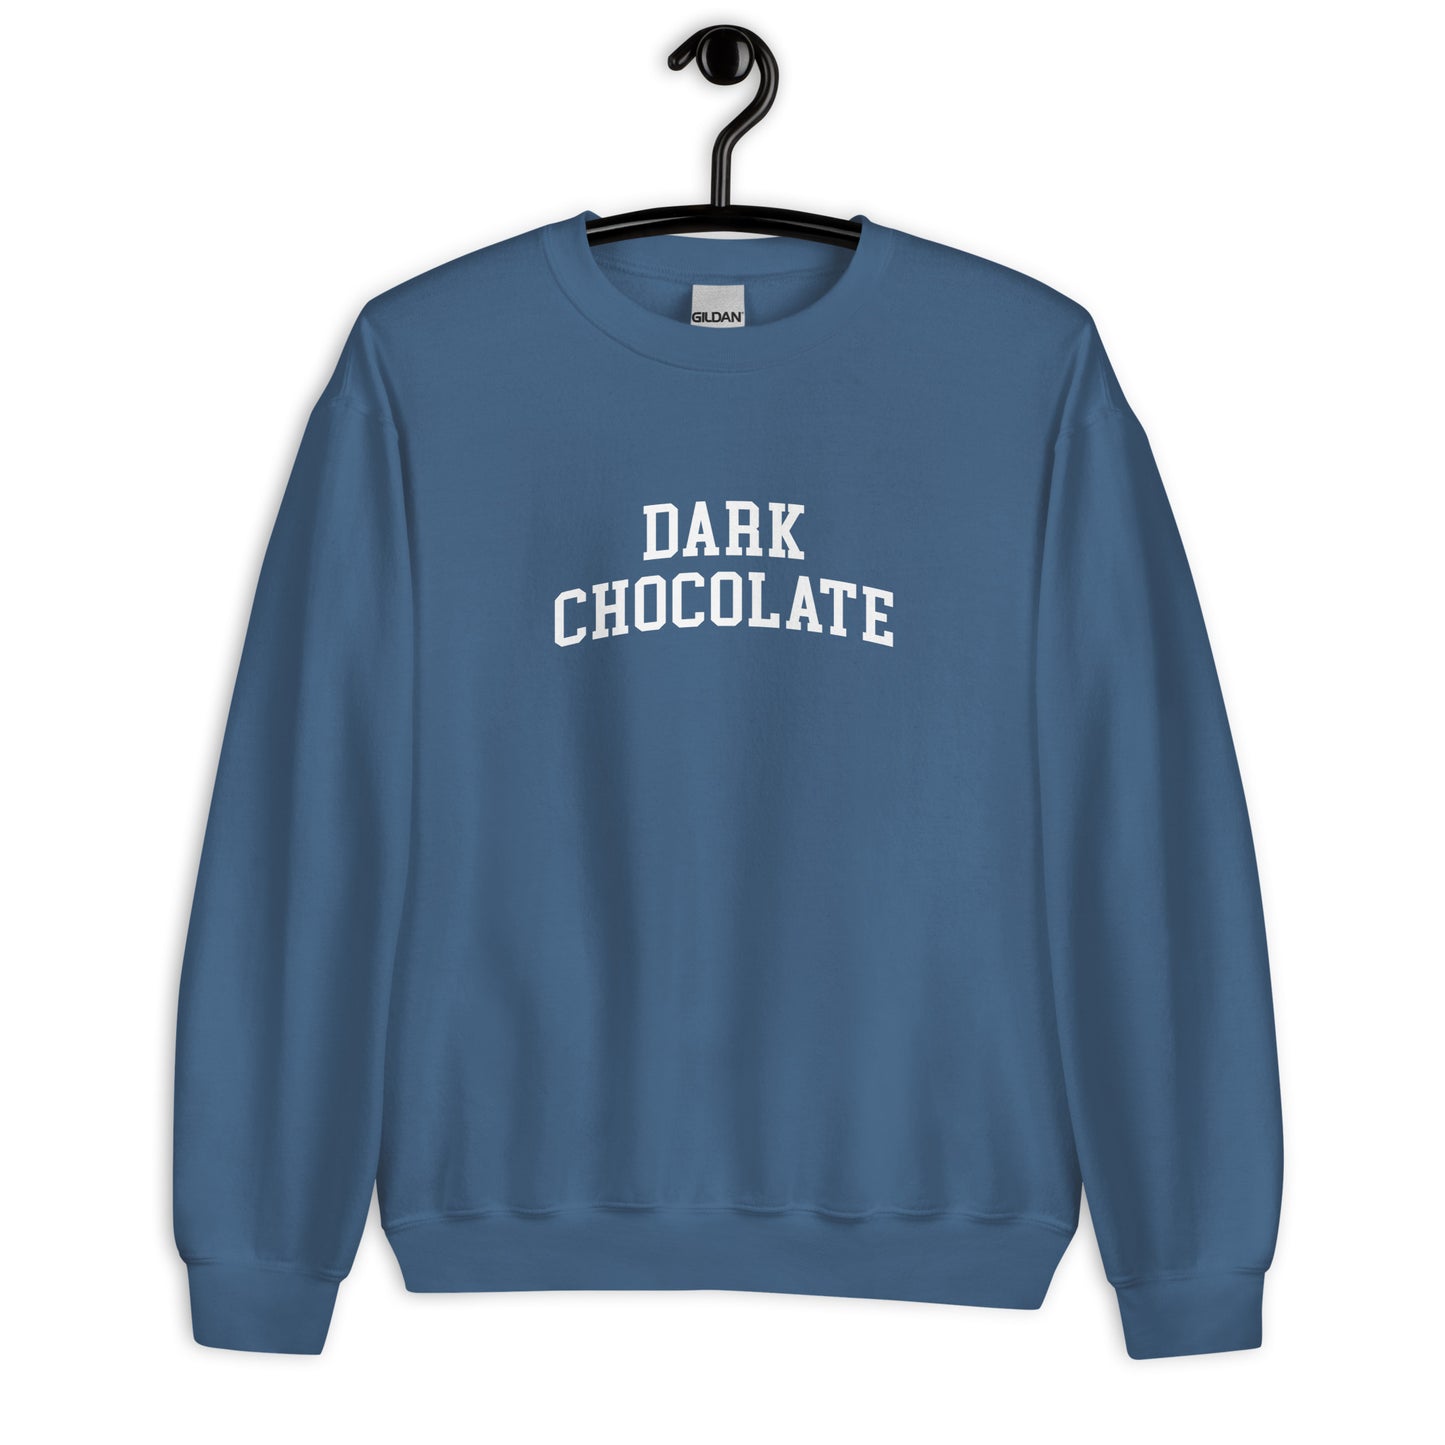 Dark Chocolate Sweatshirt - Arched Font